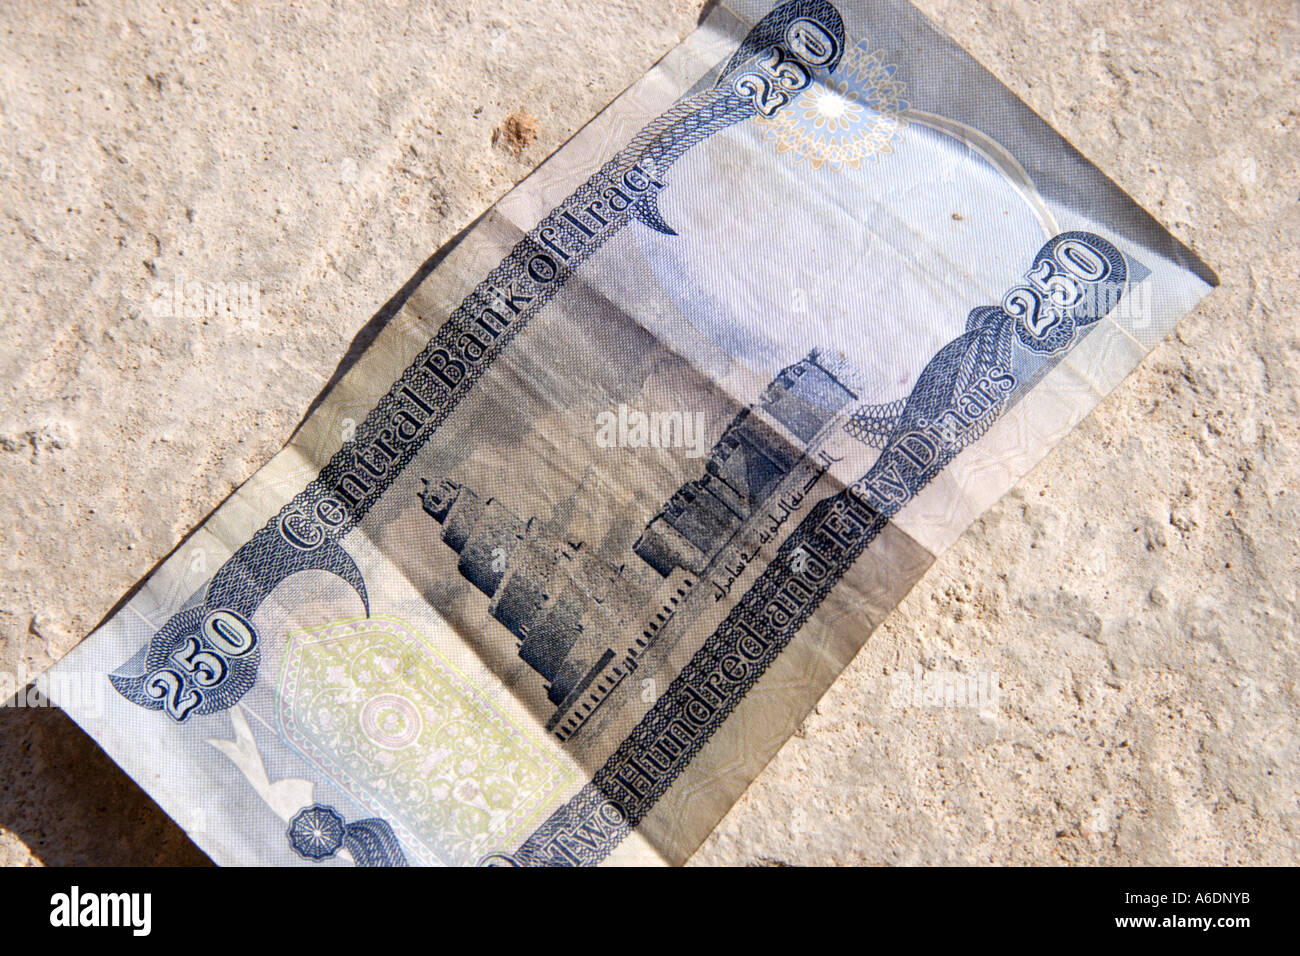 Un dinar émis 250 Irakiens après la chute de Saddam Hussein Banque D'Images